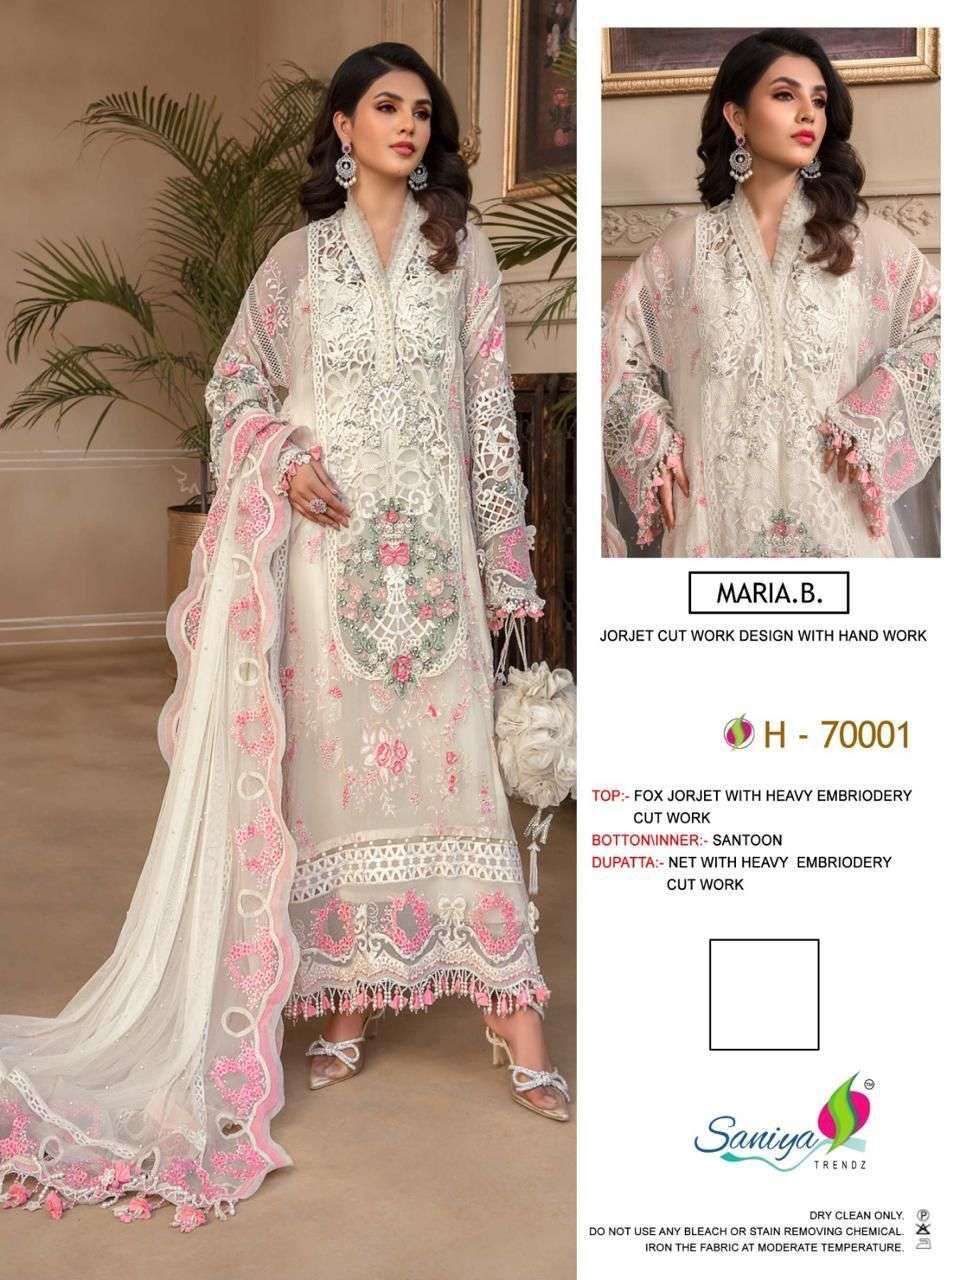 saniya trendz maria b vol 70001 faux embroidered suit 